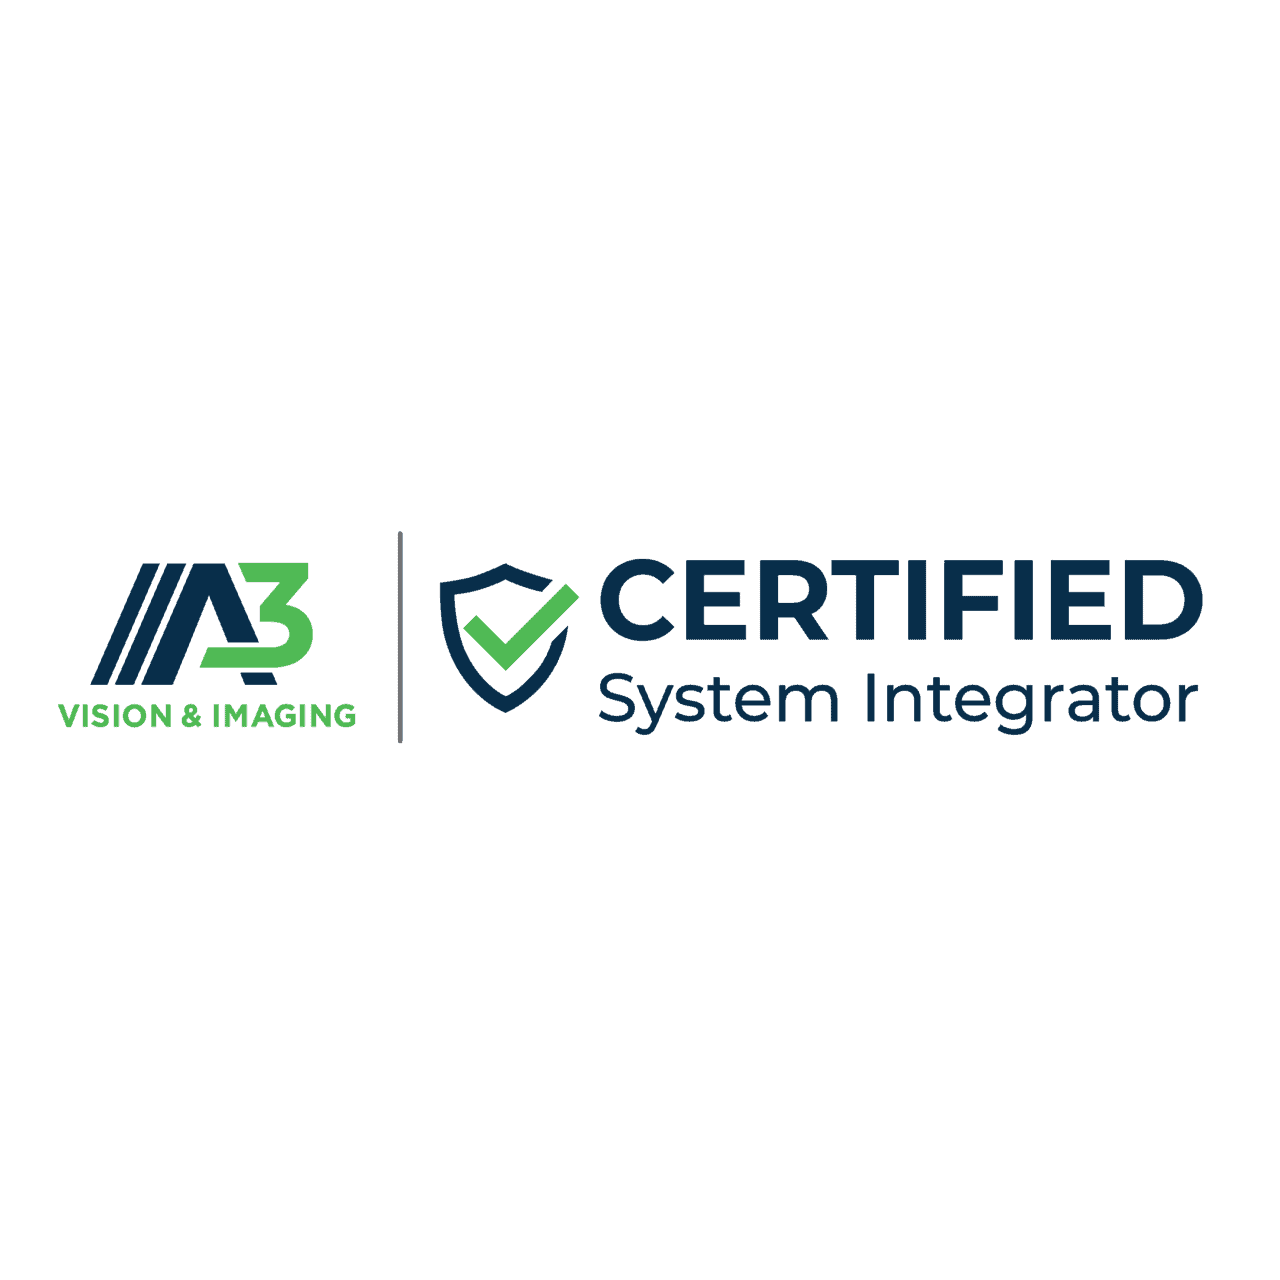 A3 Vision and Imaging - Insignia de integrador de sistemas certificado